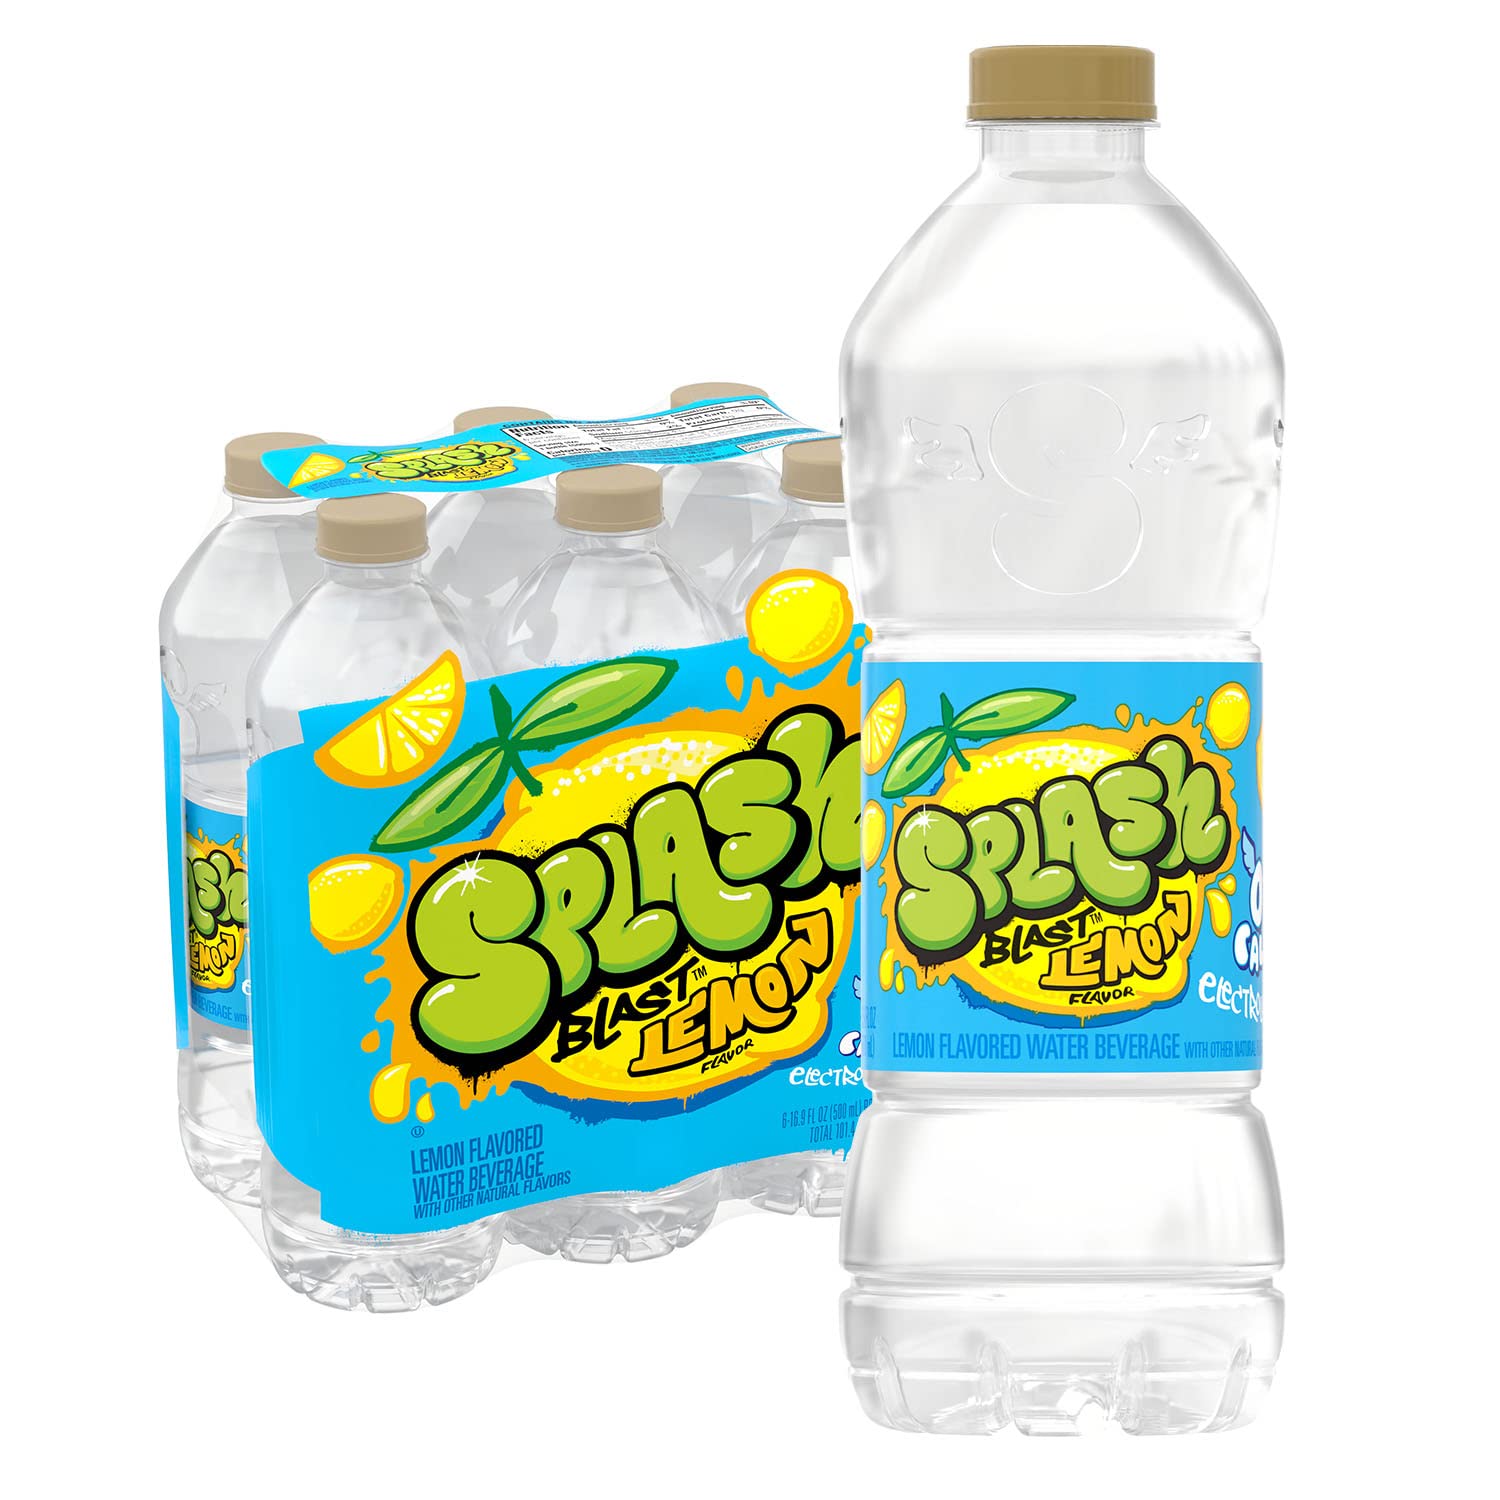 6-Pack 16.9-Oz Splash Blast Flavored Water Beverage (Lemon & Wild Berry) $1.90 ($0.32 each) w/ S&S + Free Shipping w/ Prime or on $35+